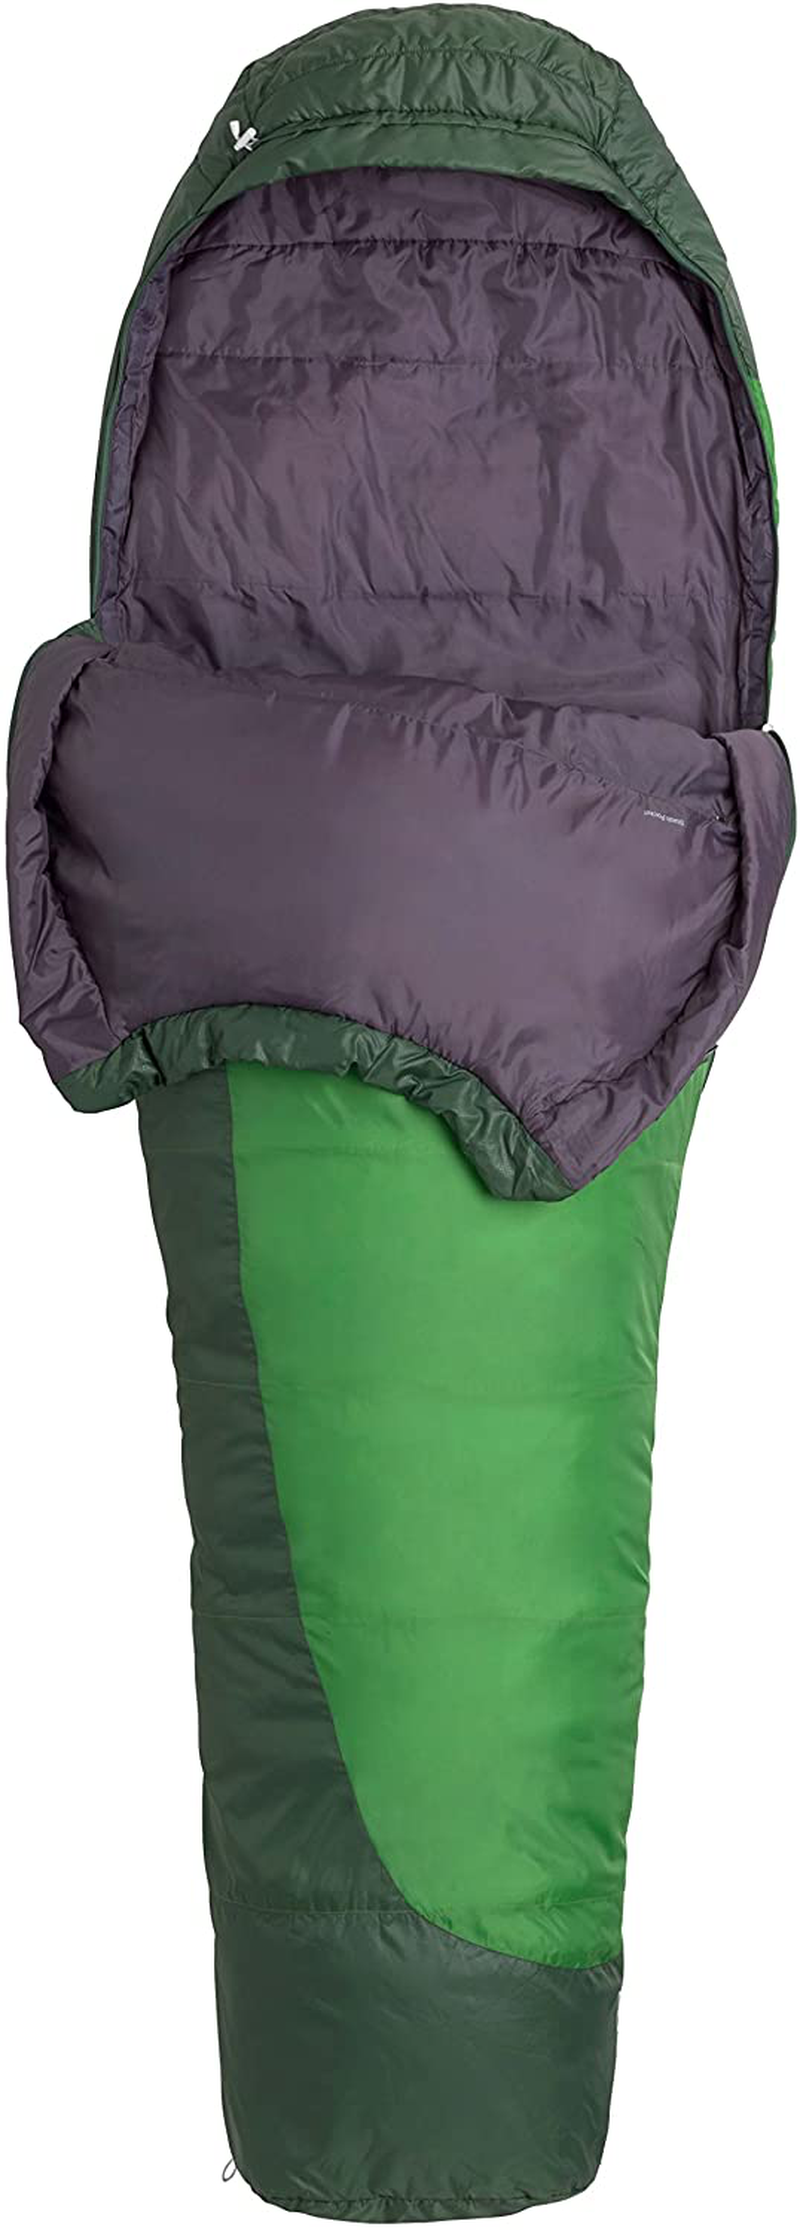 Marmot Trestles 30 Degree Mummy Sleeping Bag Sporting Goods > Outdoor Recreation > Camping & Hiking > Sleeping Bags MARMOT   